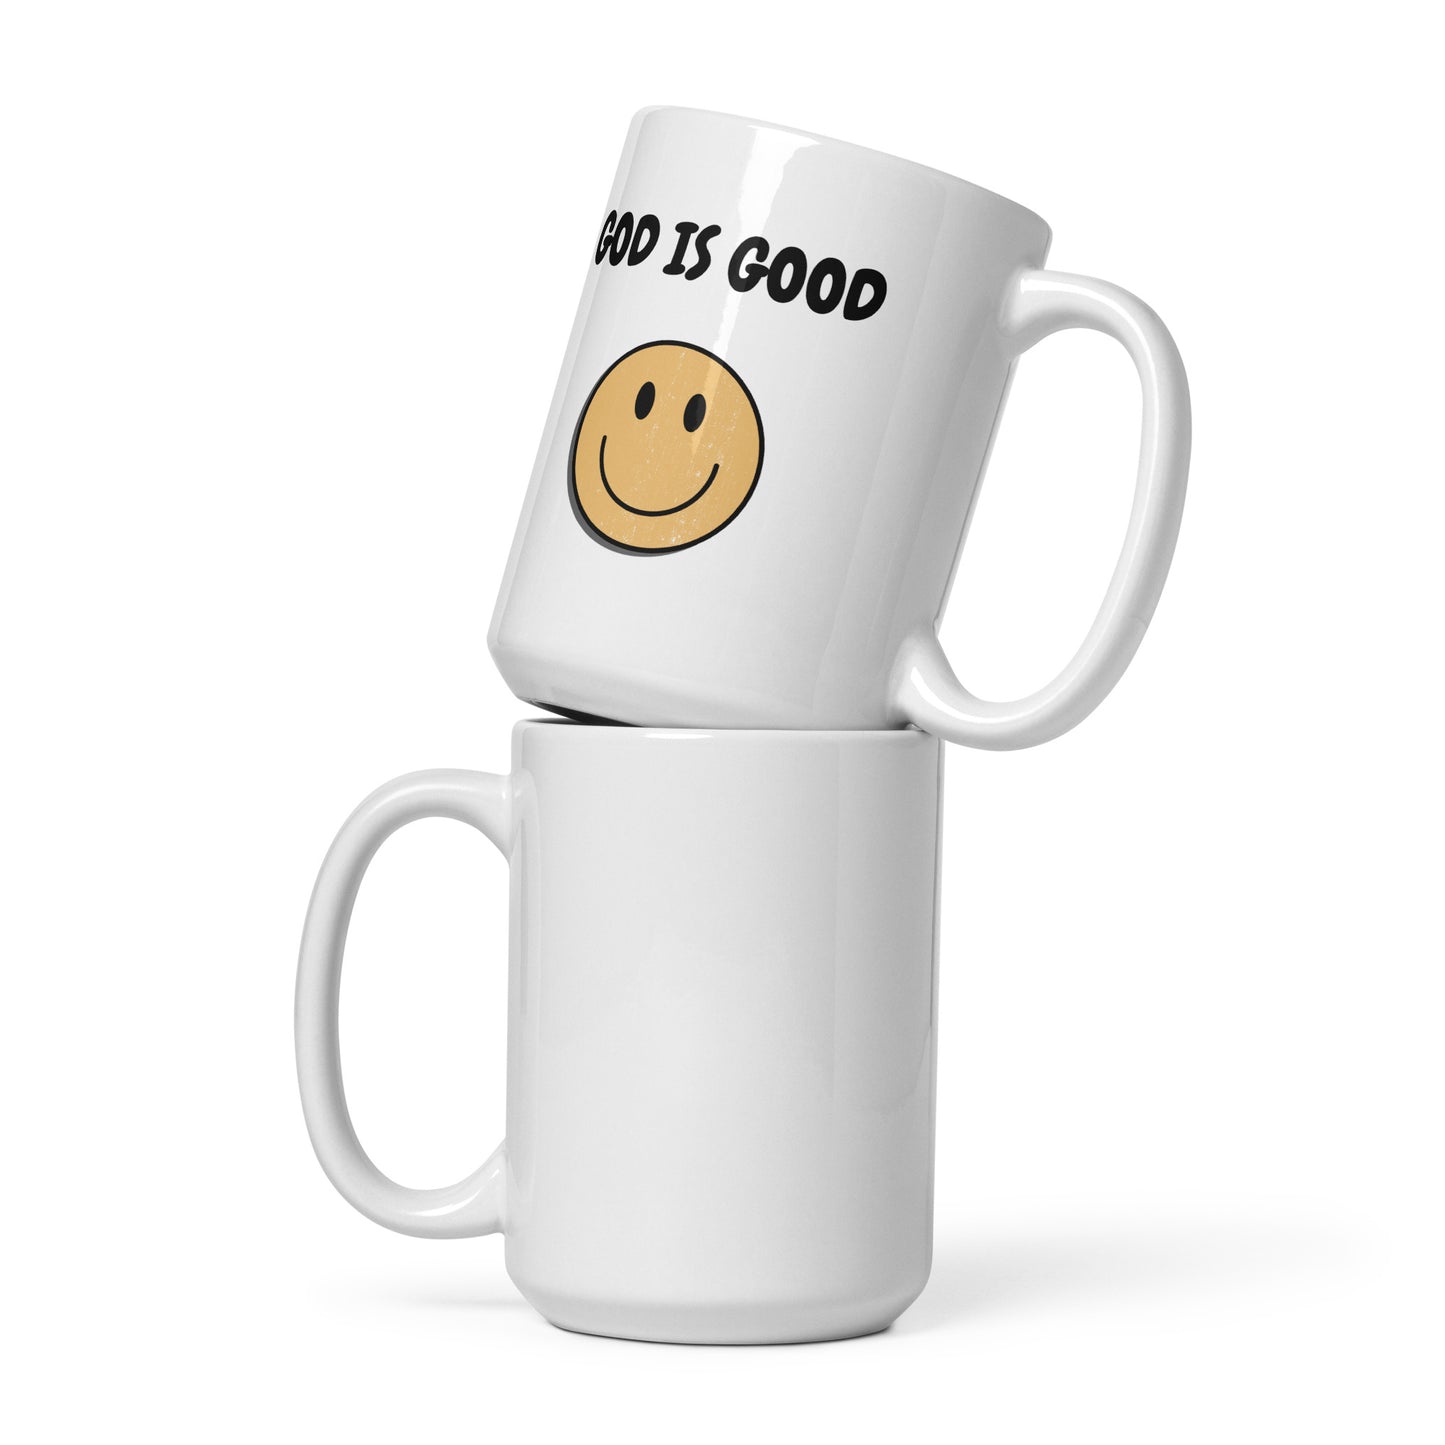 GOD is Good - White glossy mug